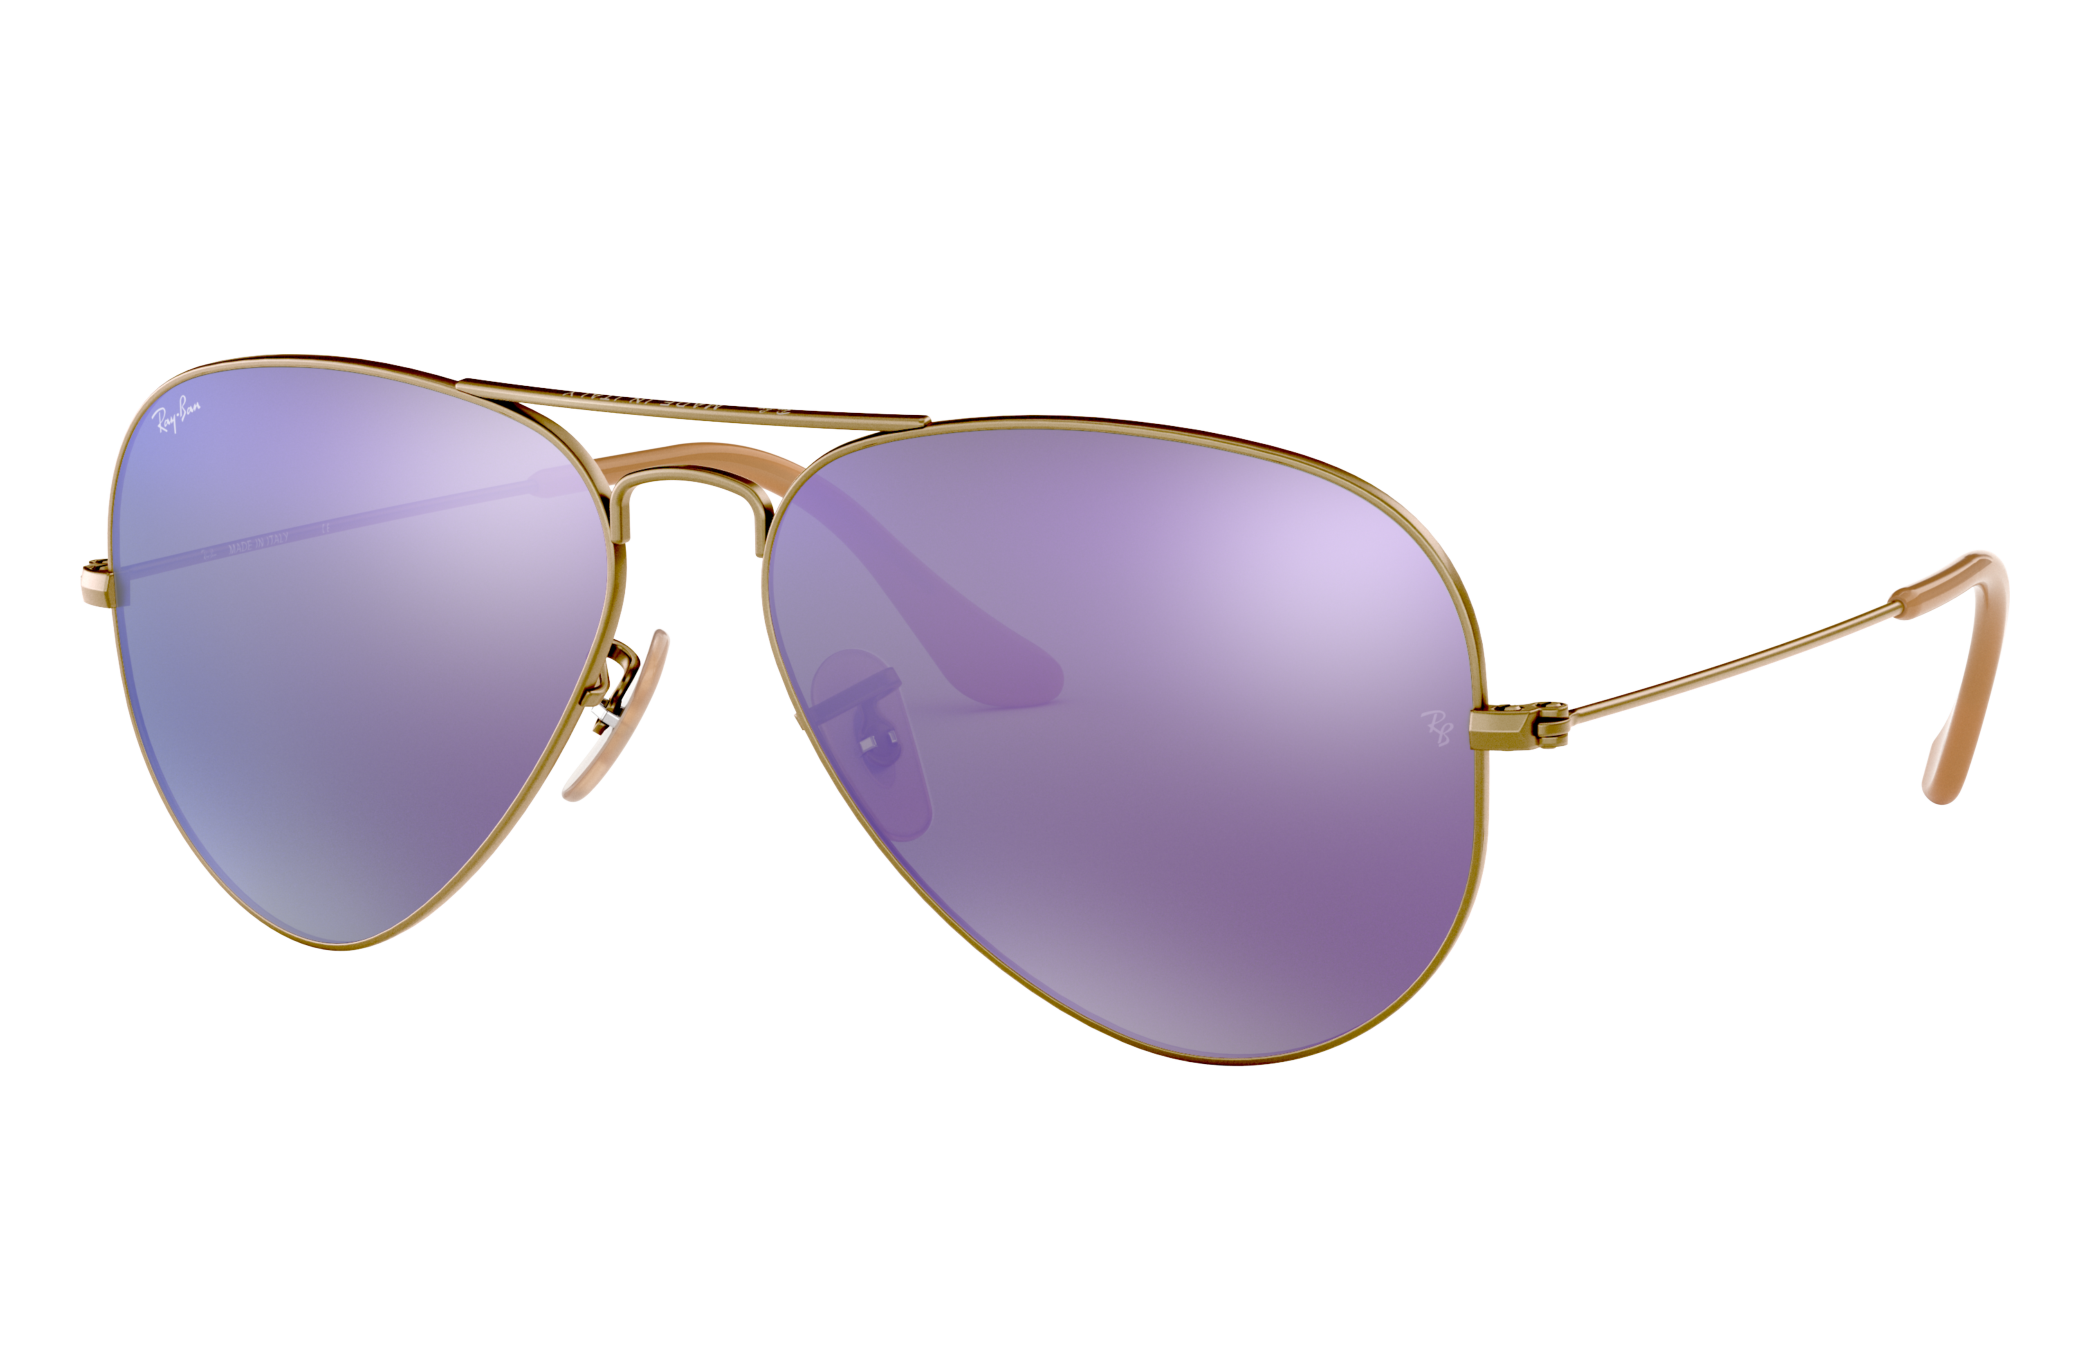 Specialiseren Waardig Graan Aviator Flash Lenses Sunglasses in Bronze-Copper and Violet | Ray-Ban®